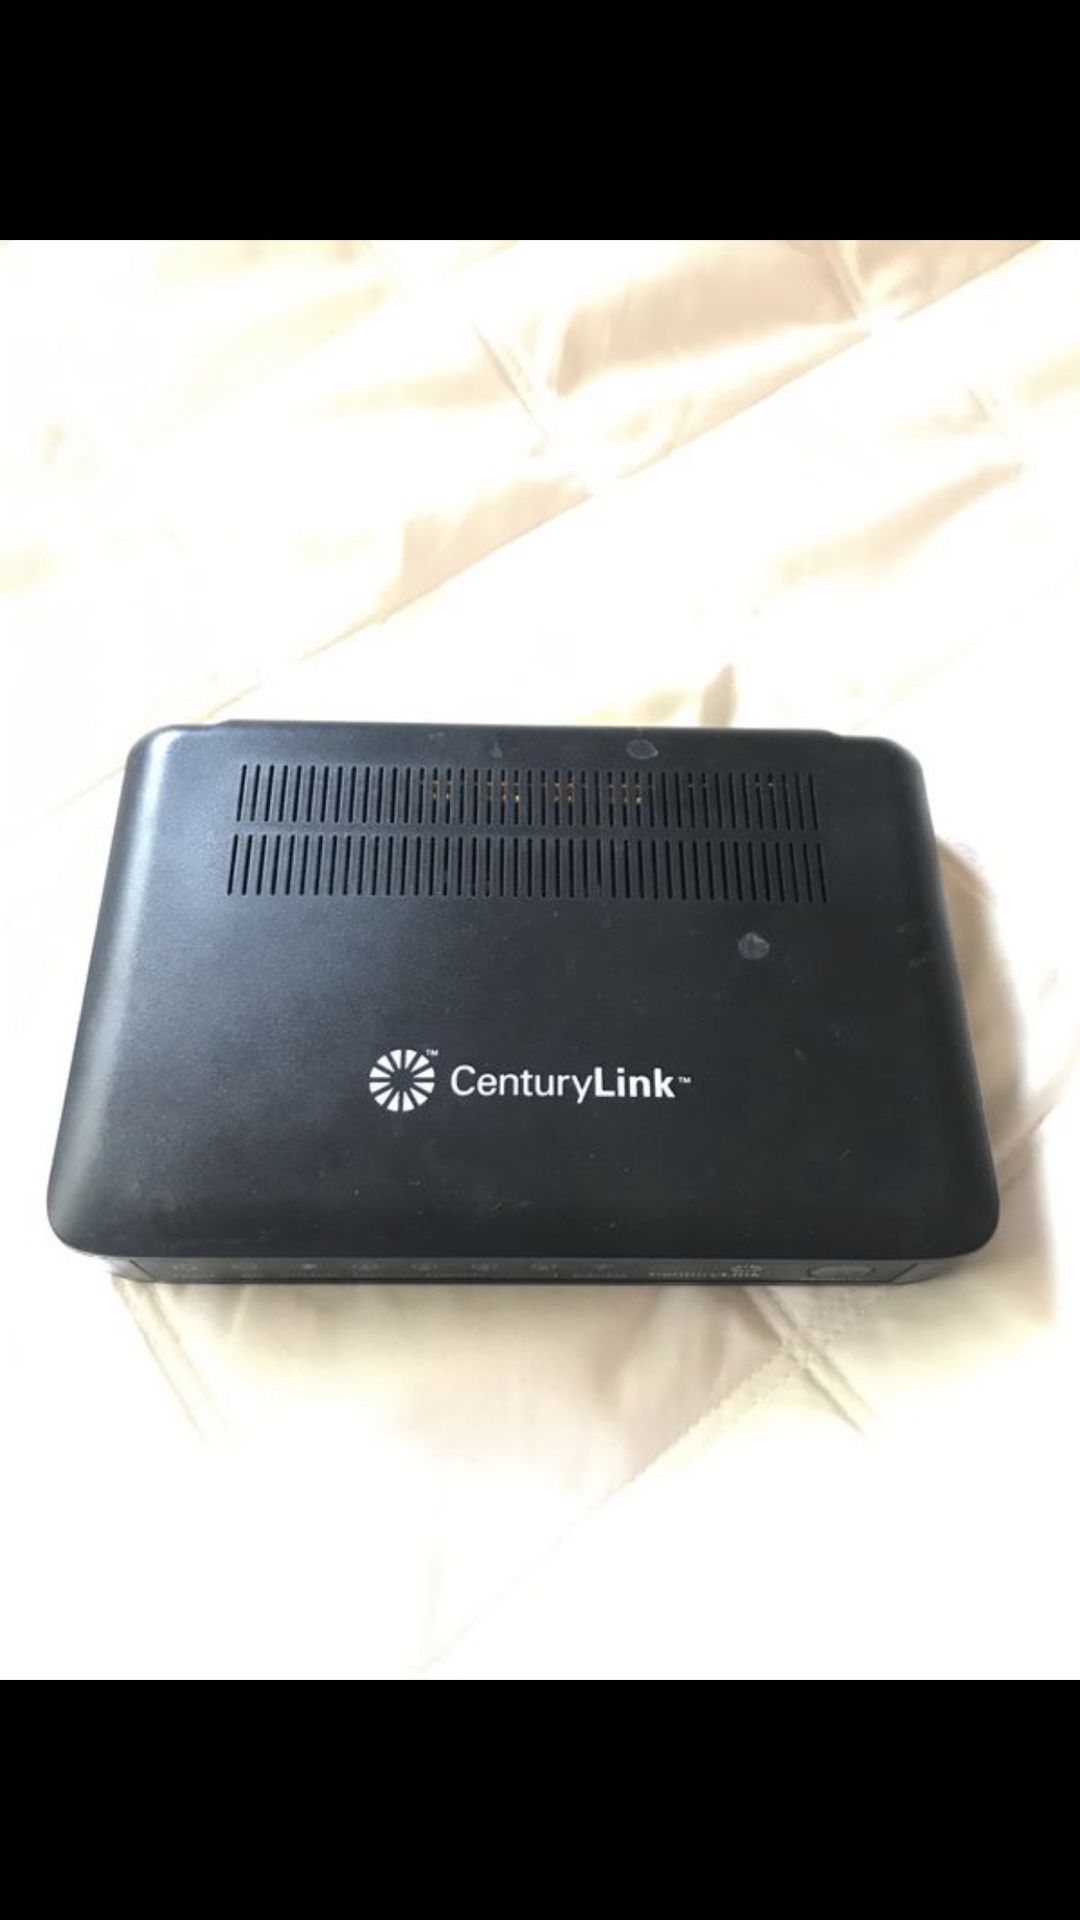 Centurylink Modem/Router